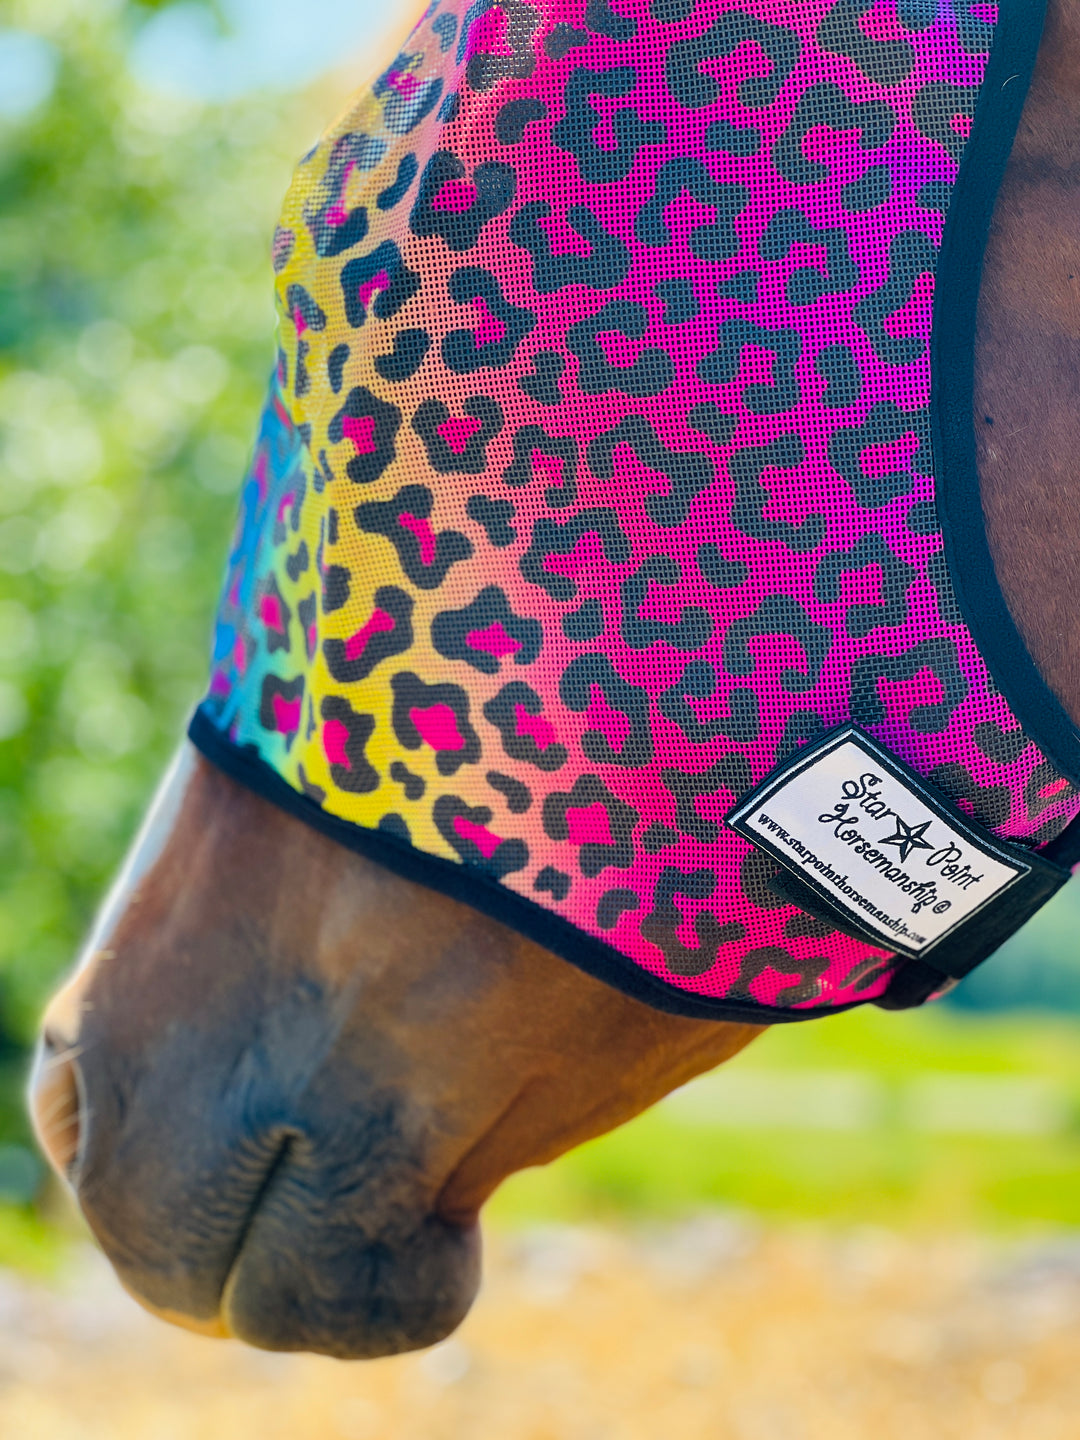 Rainbow Cheetah UV Fly Mask - Mini to Horse Size - Star Point Horsemanship